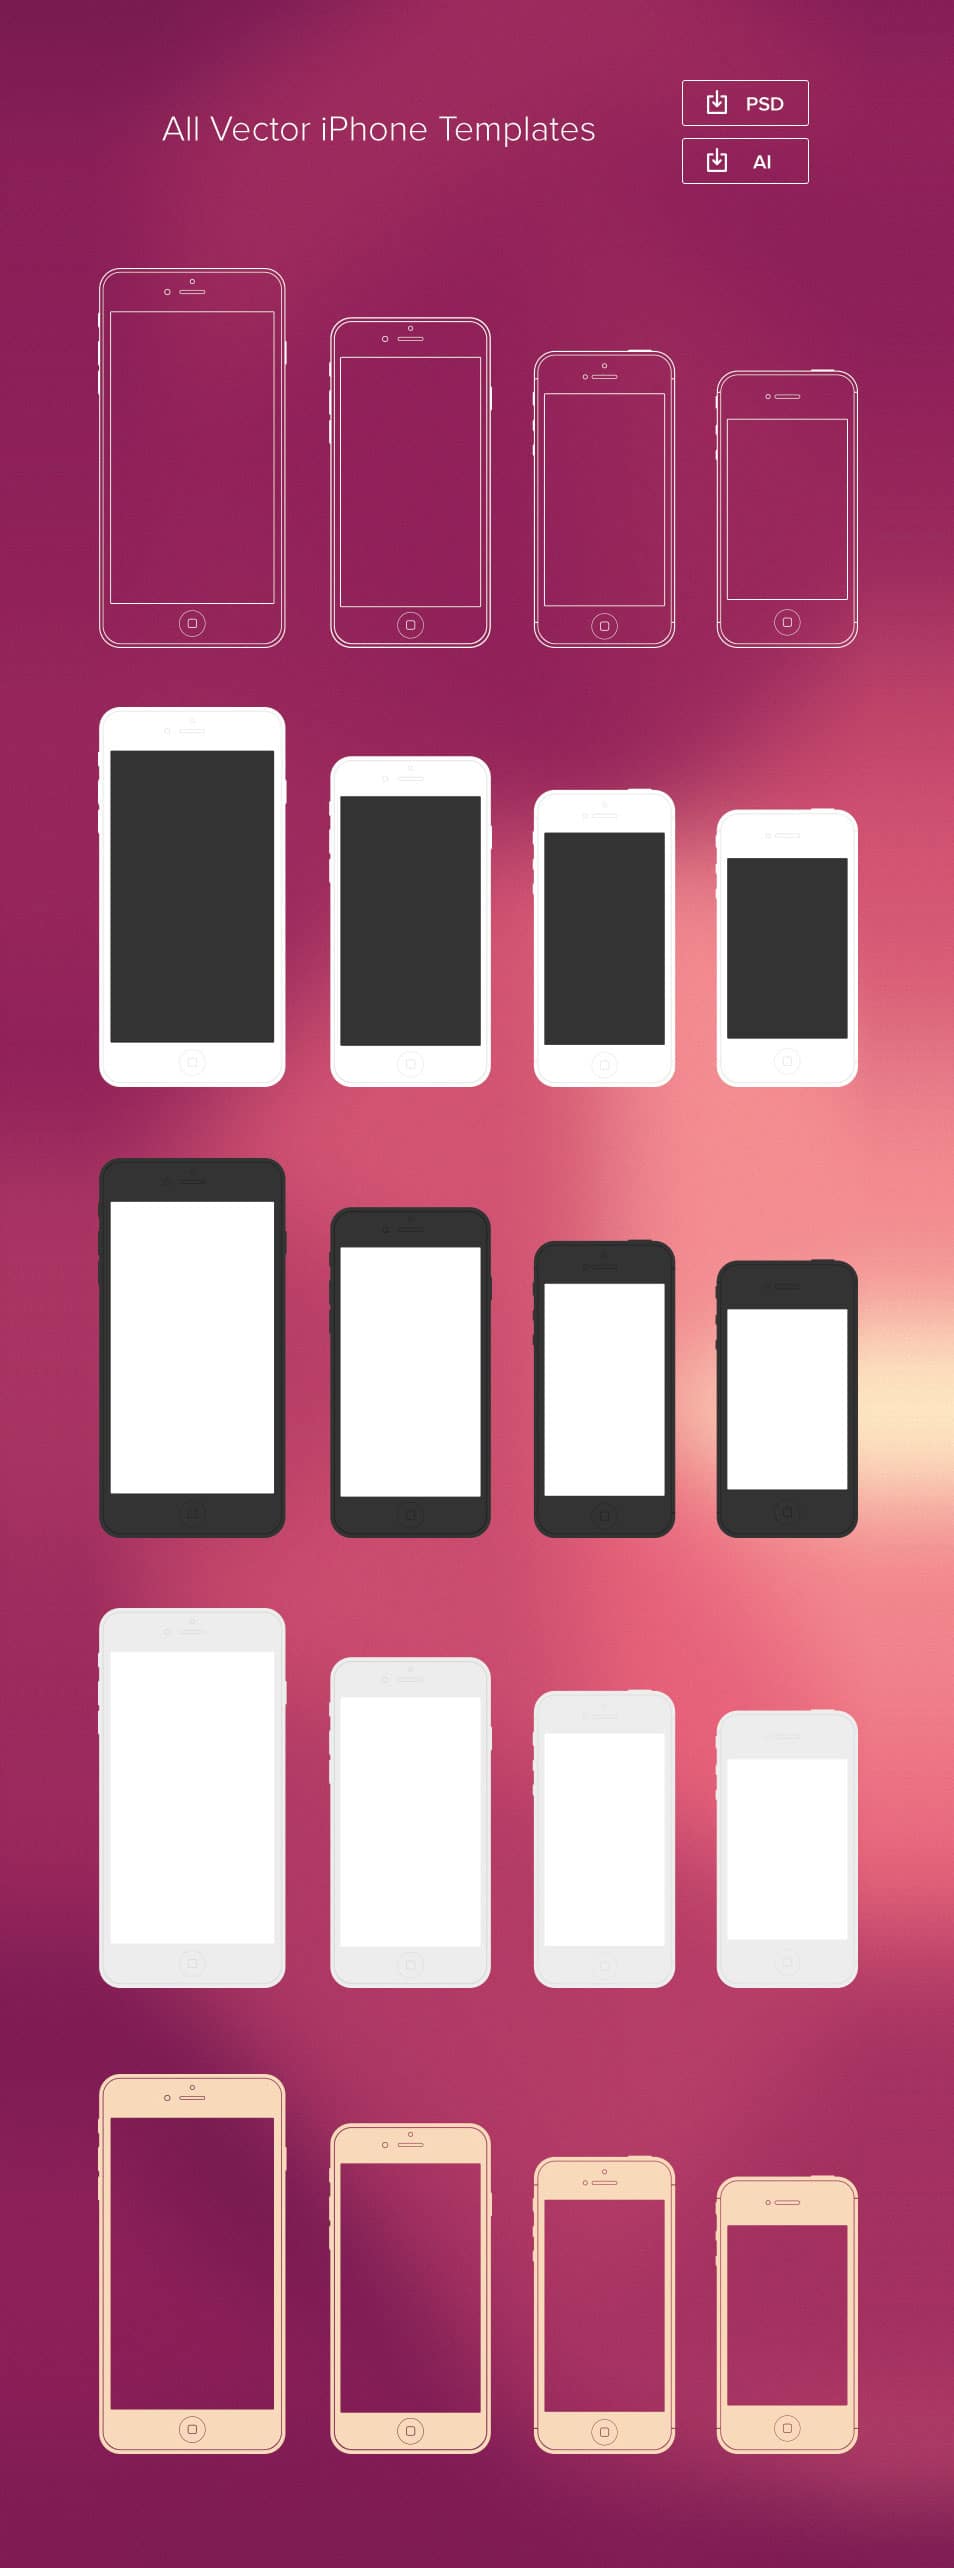 Minimal iPhone Templates